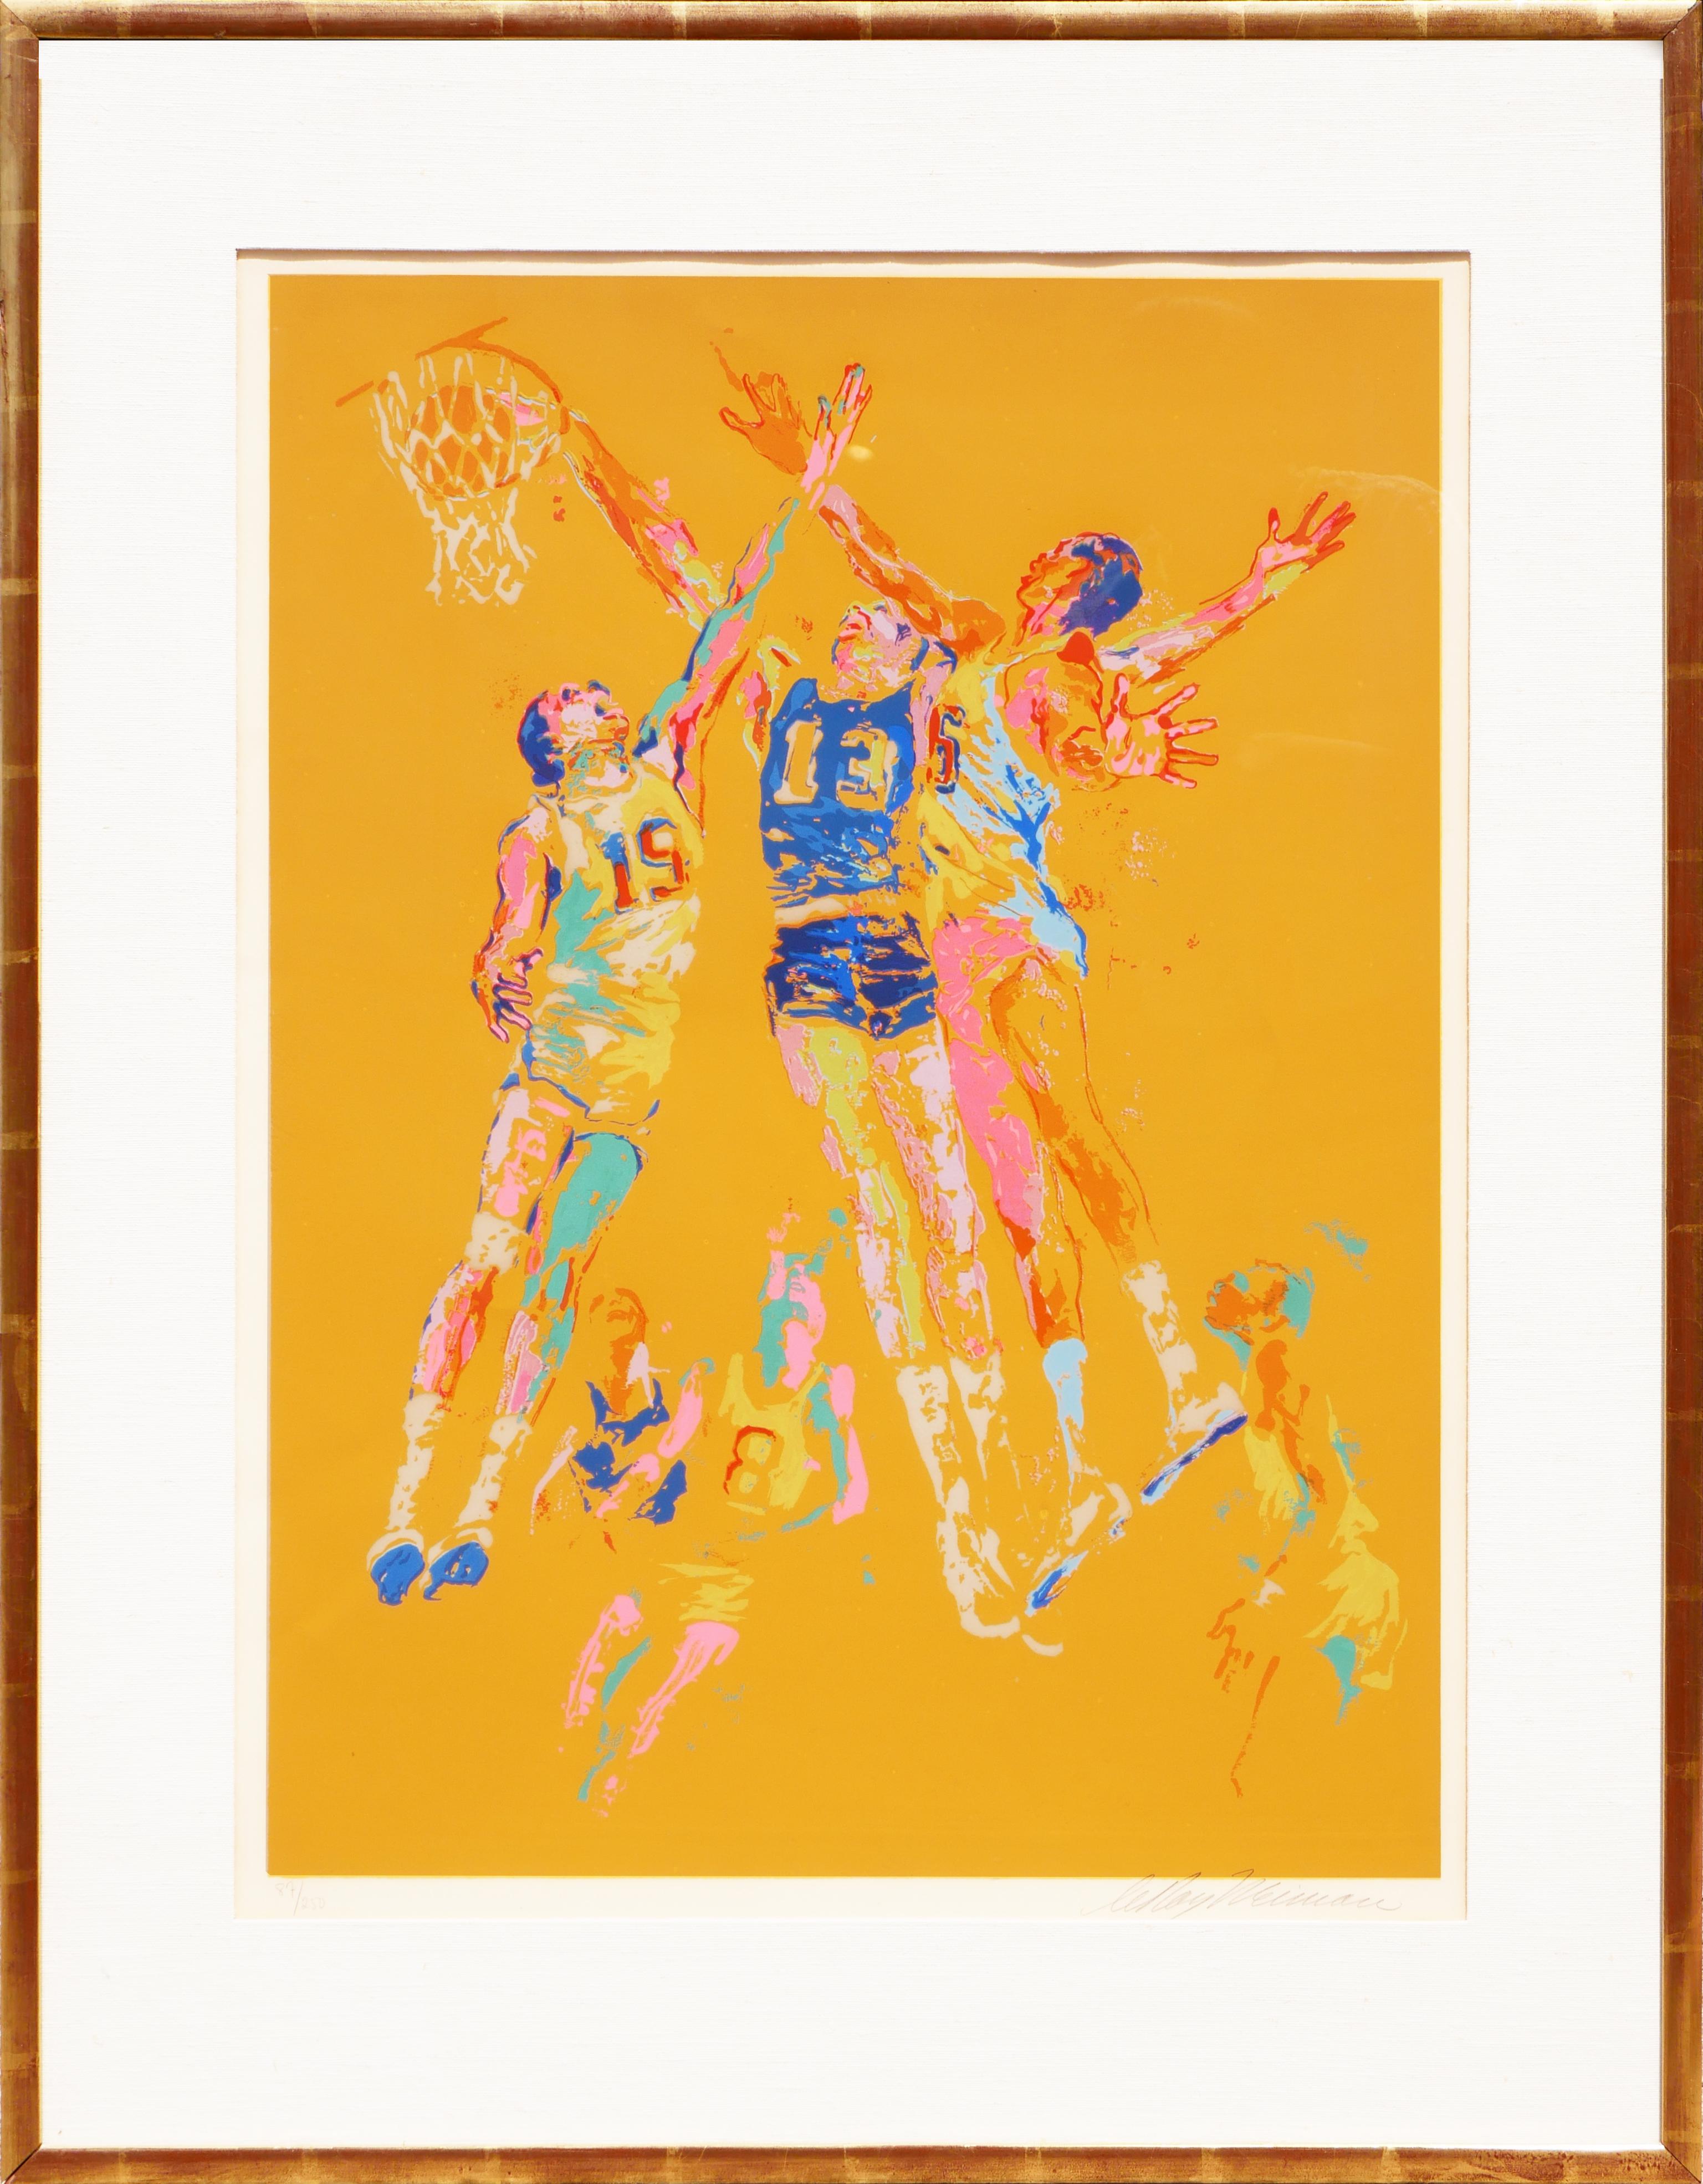 Leroy Neiman Abstract Print - "Basketball" Orange Toned Abstract Serigraph